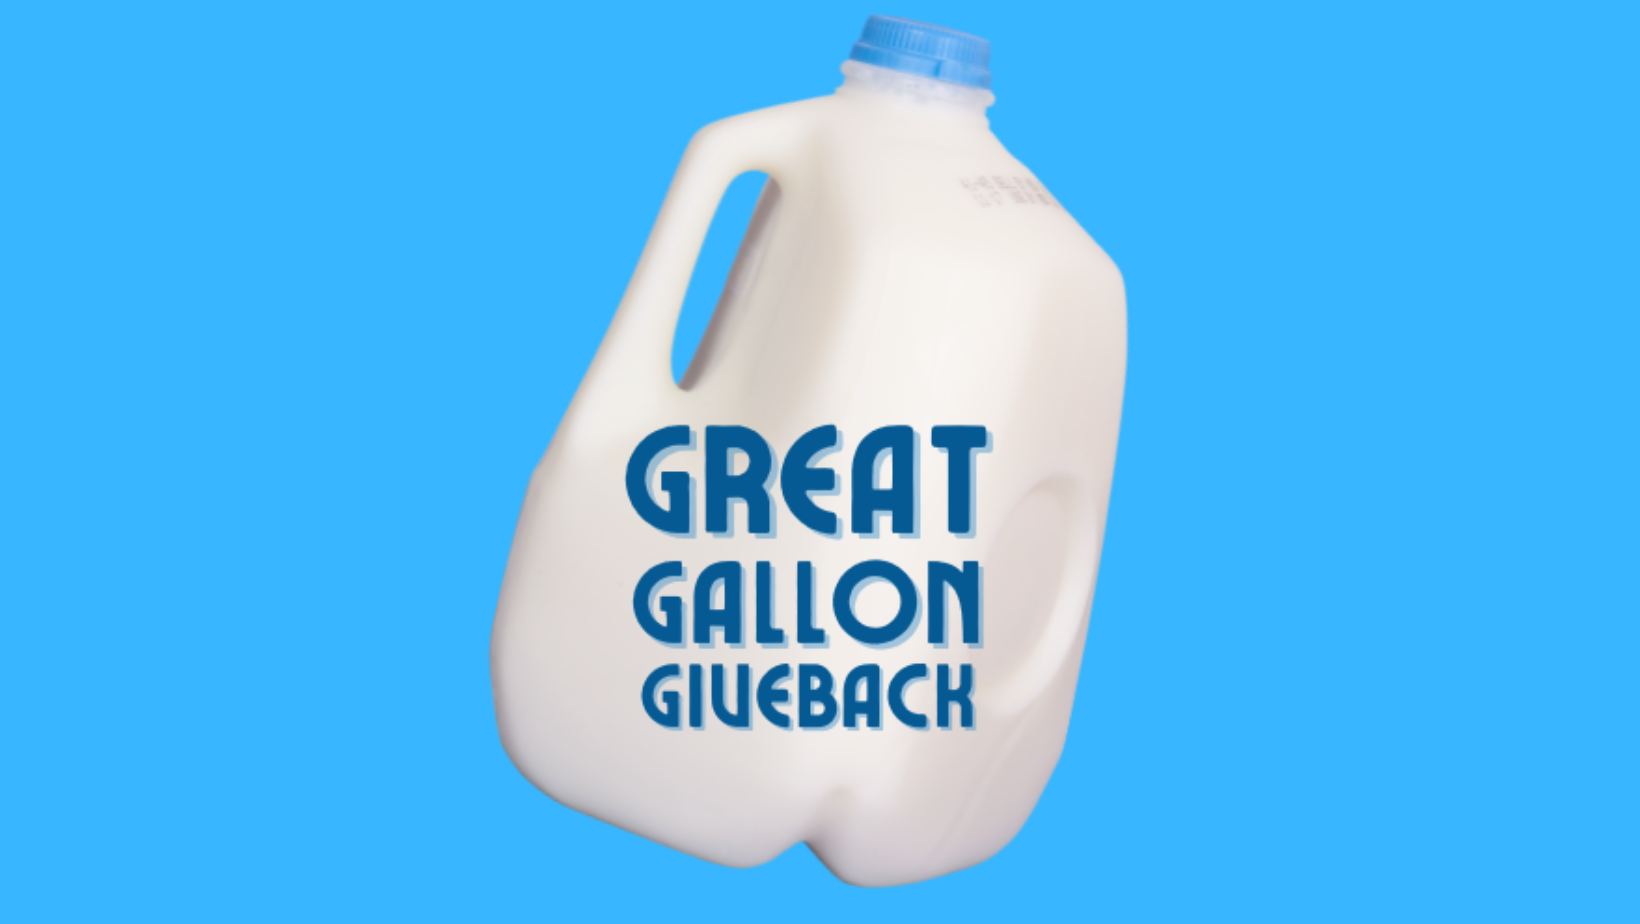 Great Gallon Giveback image